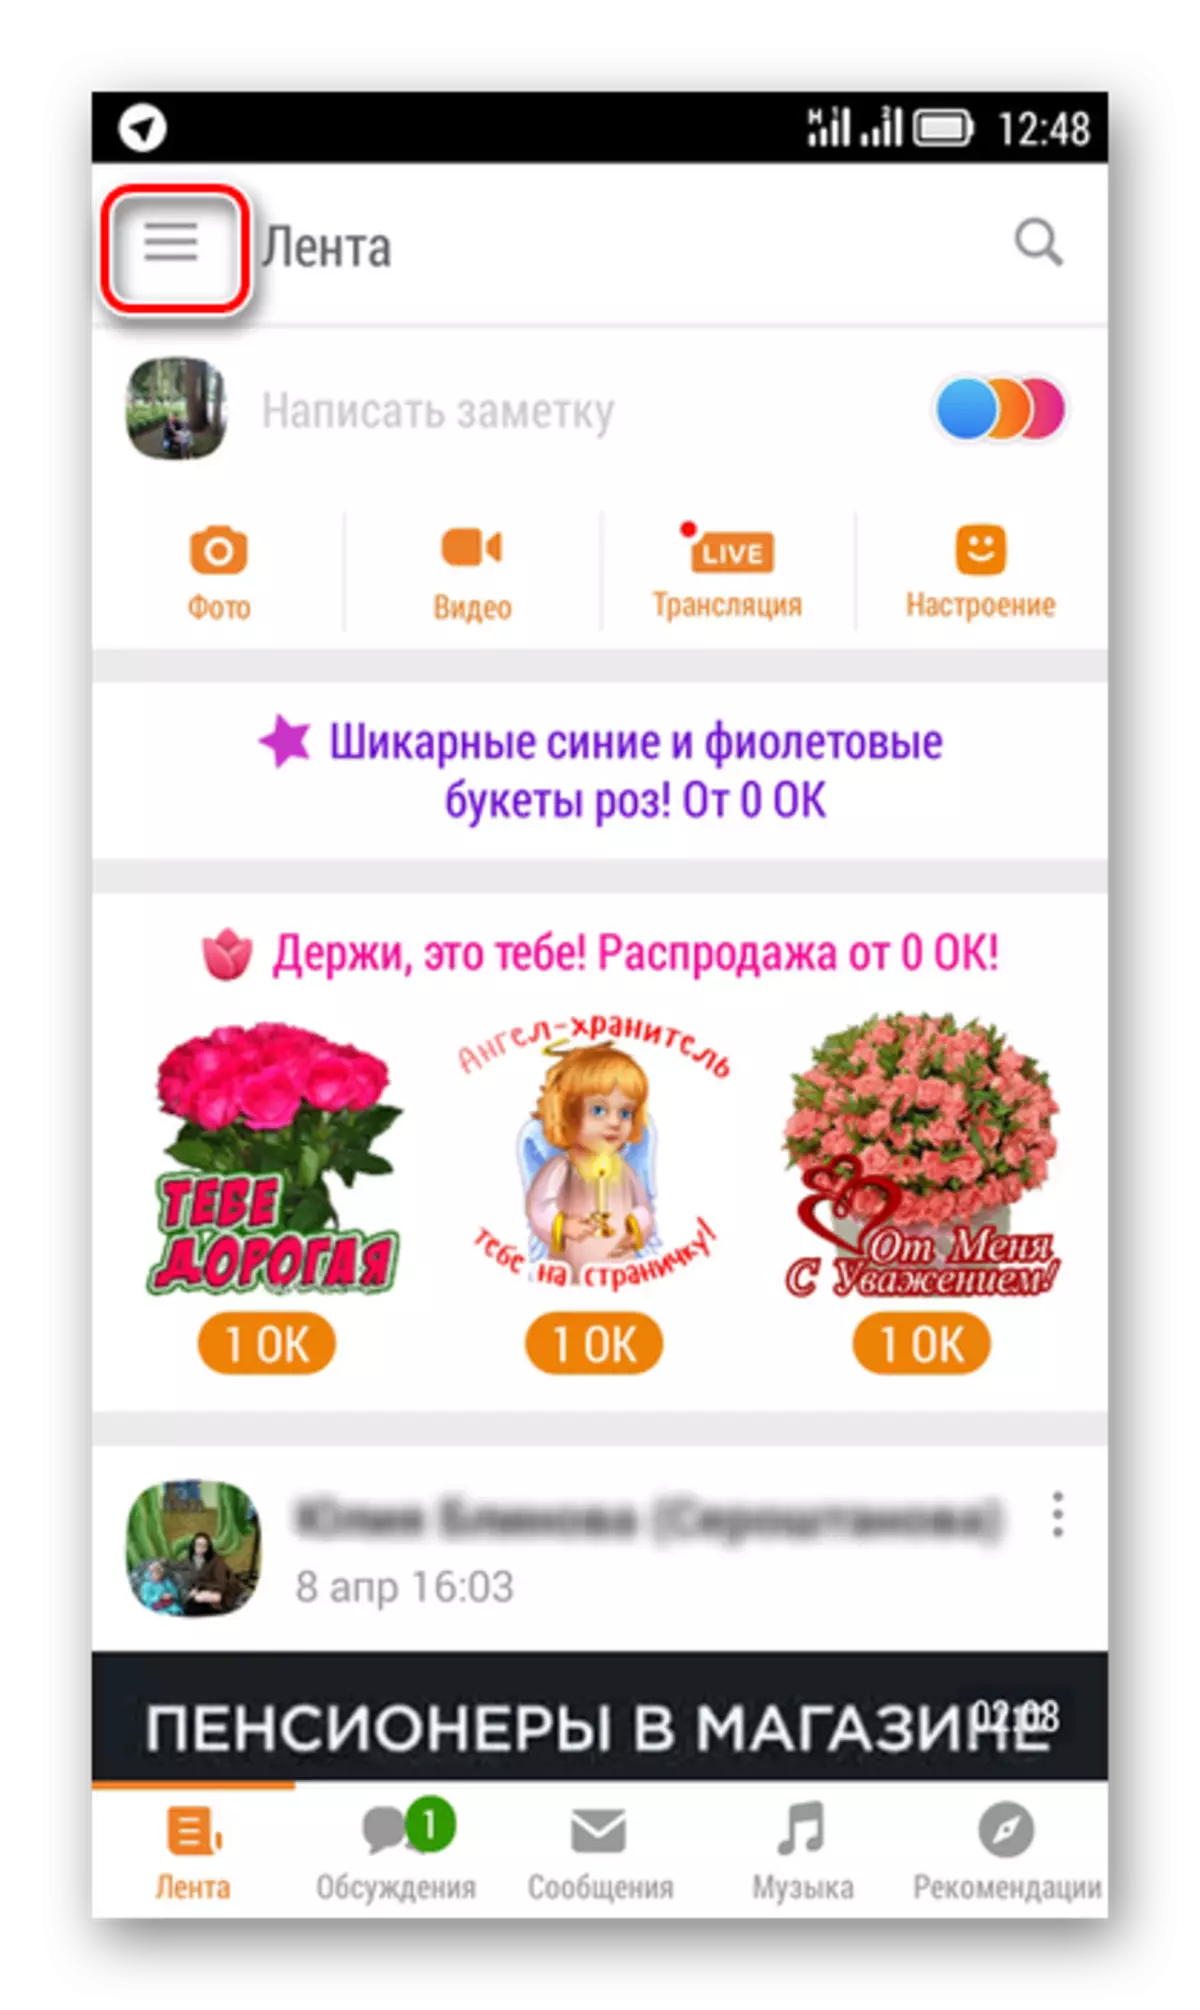 Odnoklassniki உள்ள மெனுவில் உள்நுழைக